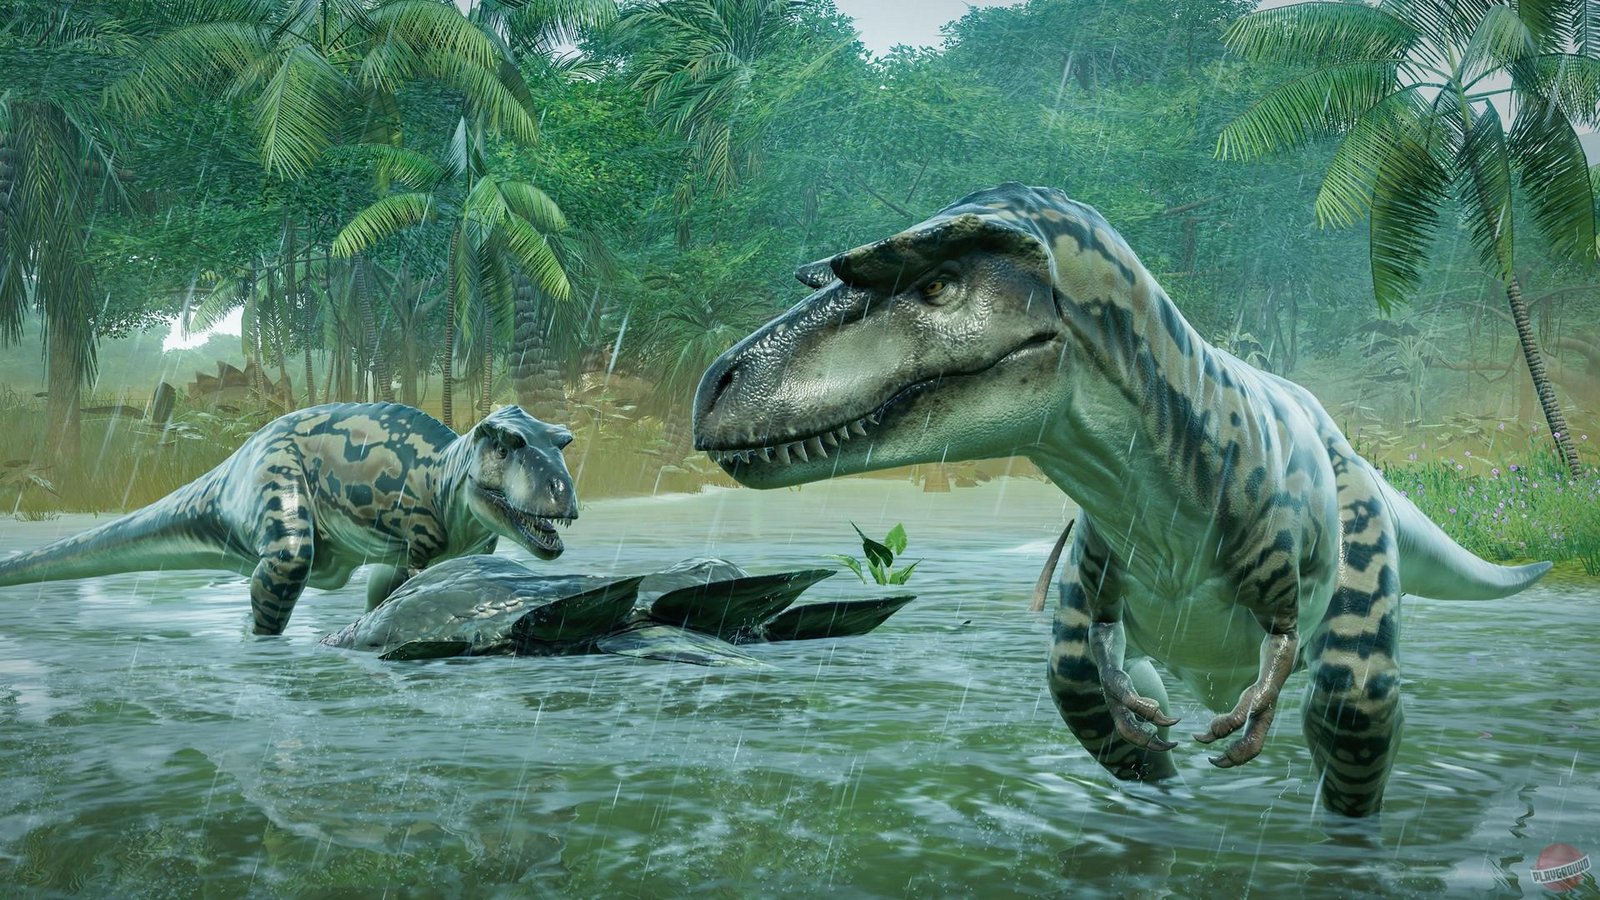 Jurassic World Evolution: Return To Jurassic Park